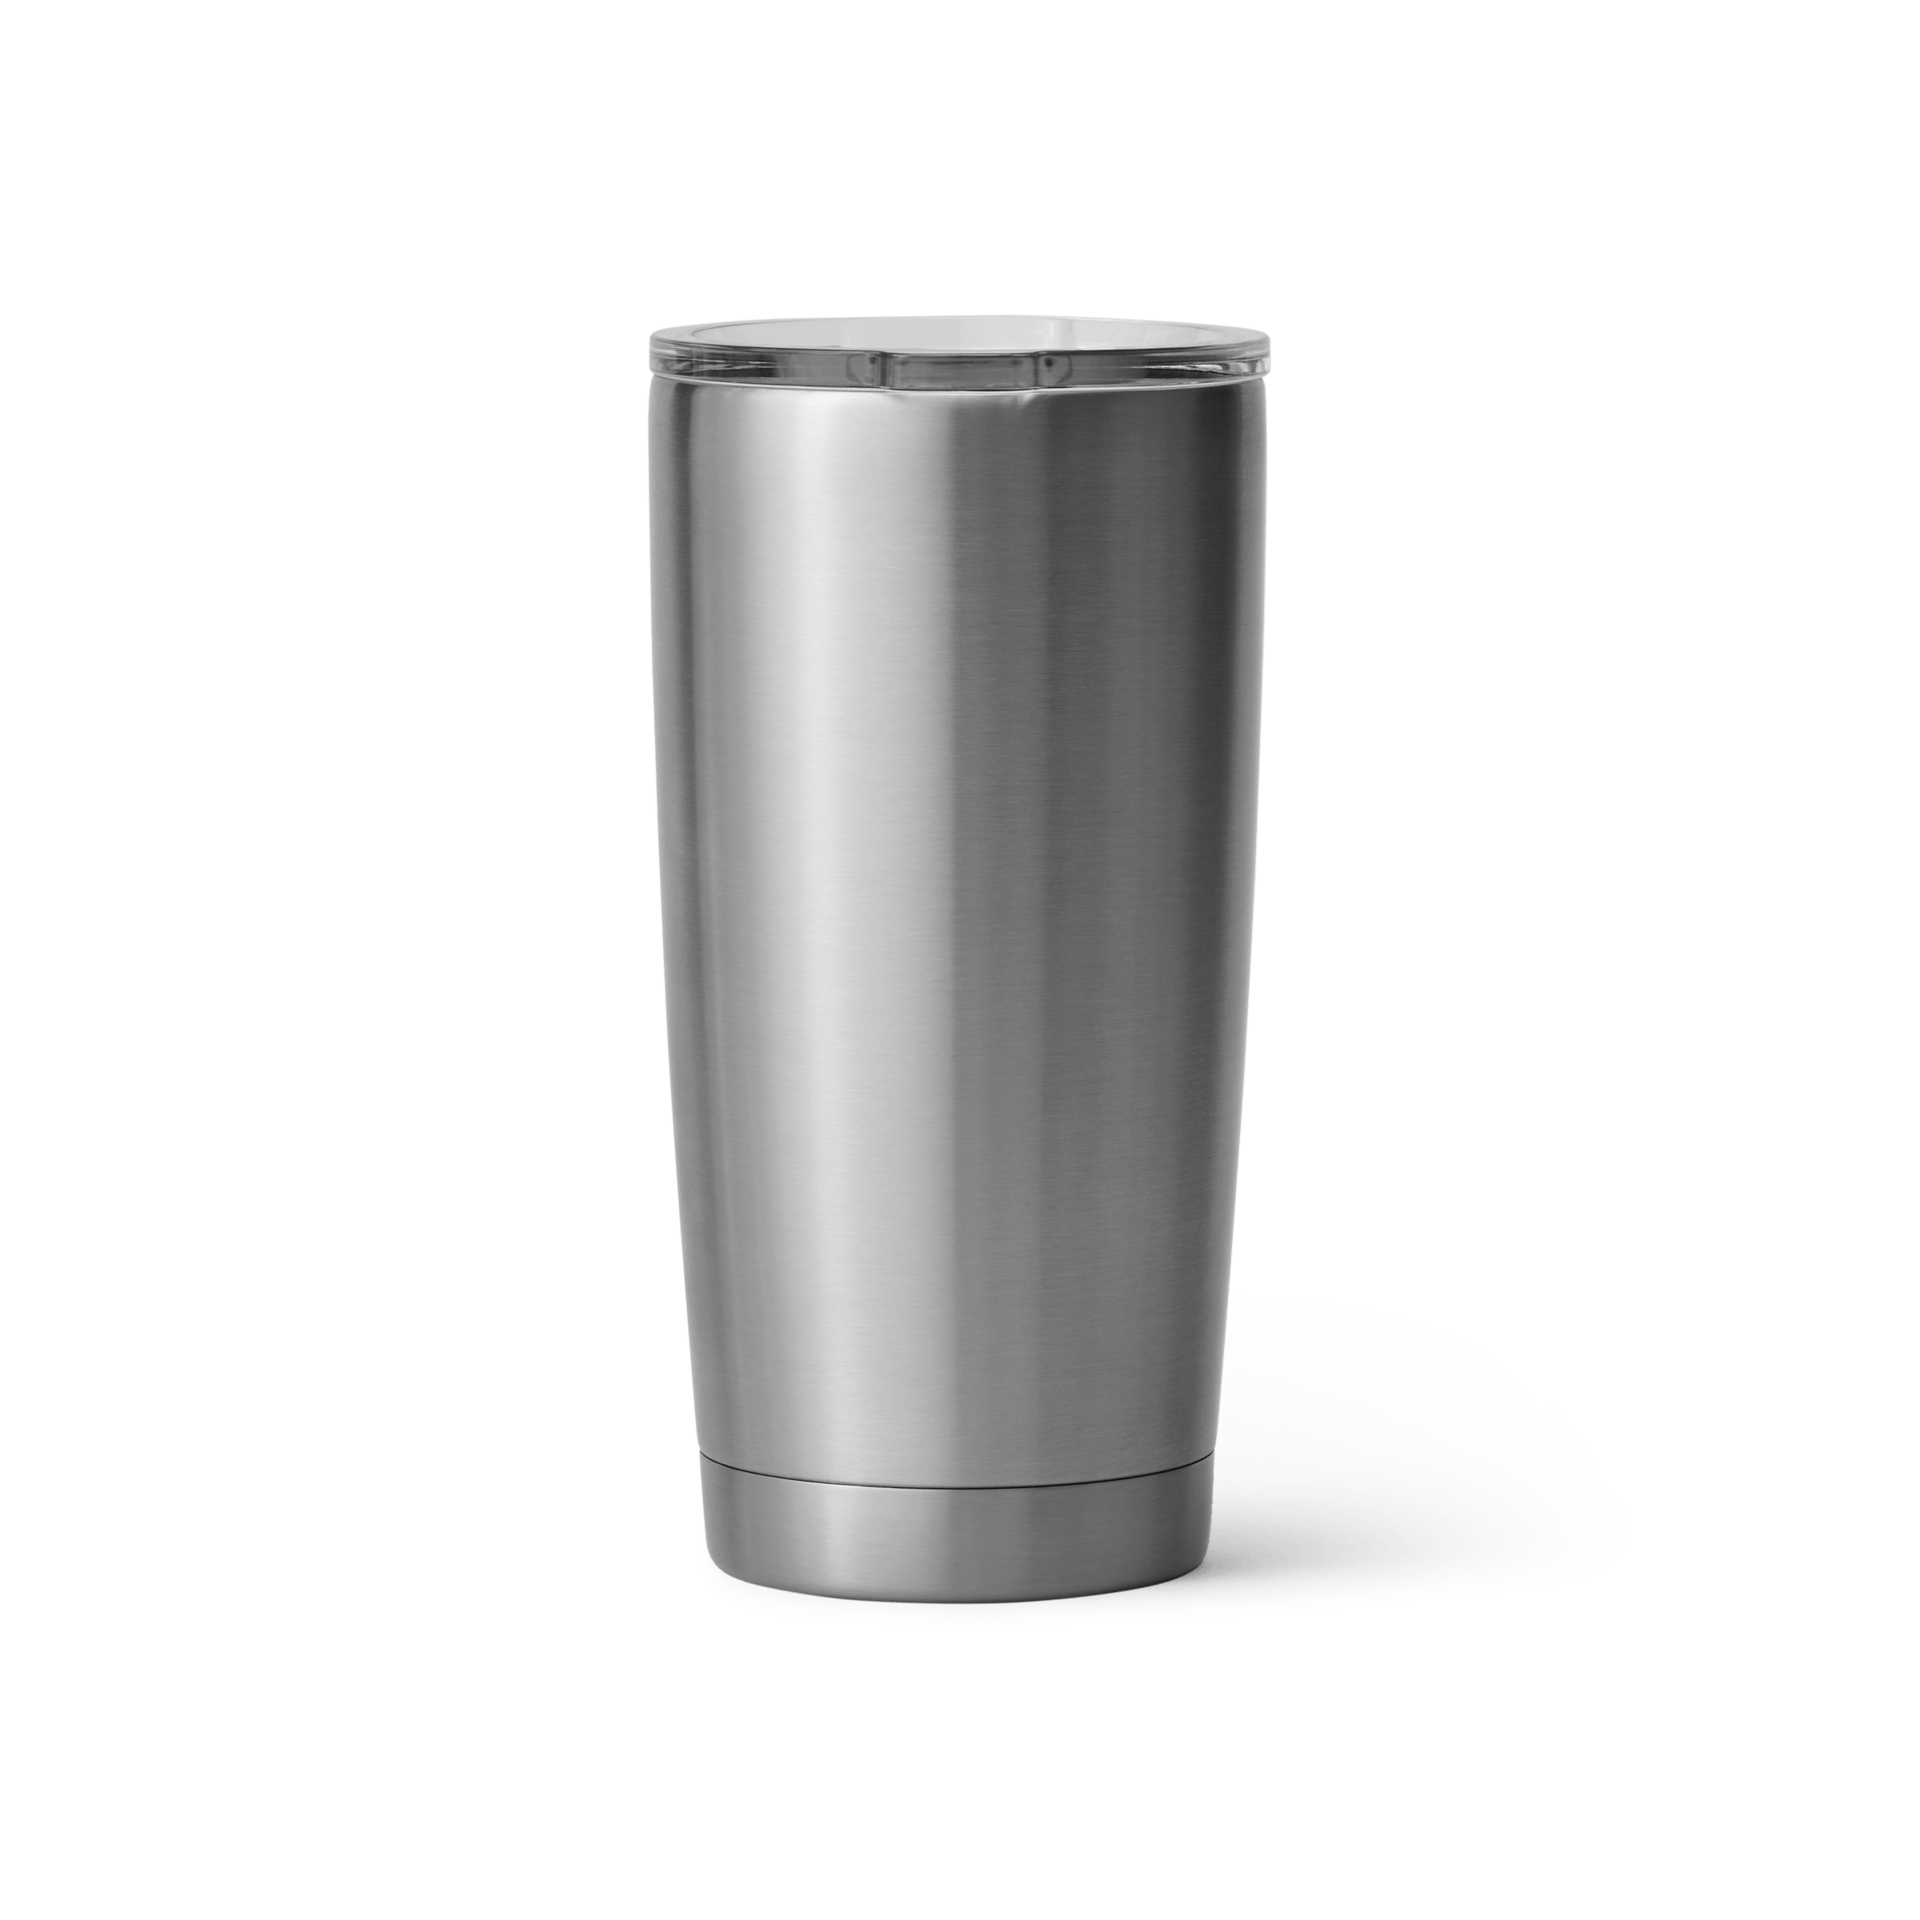 YETI Rambler 20 oz Cocktail Shaker, Stainless Steel, Vacuum Insulated, White